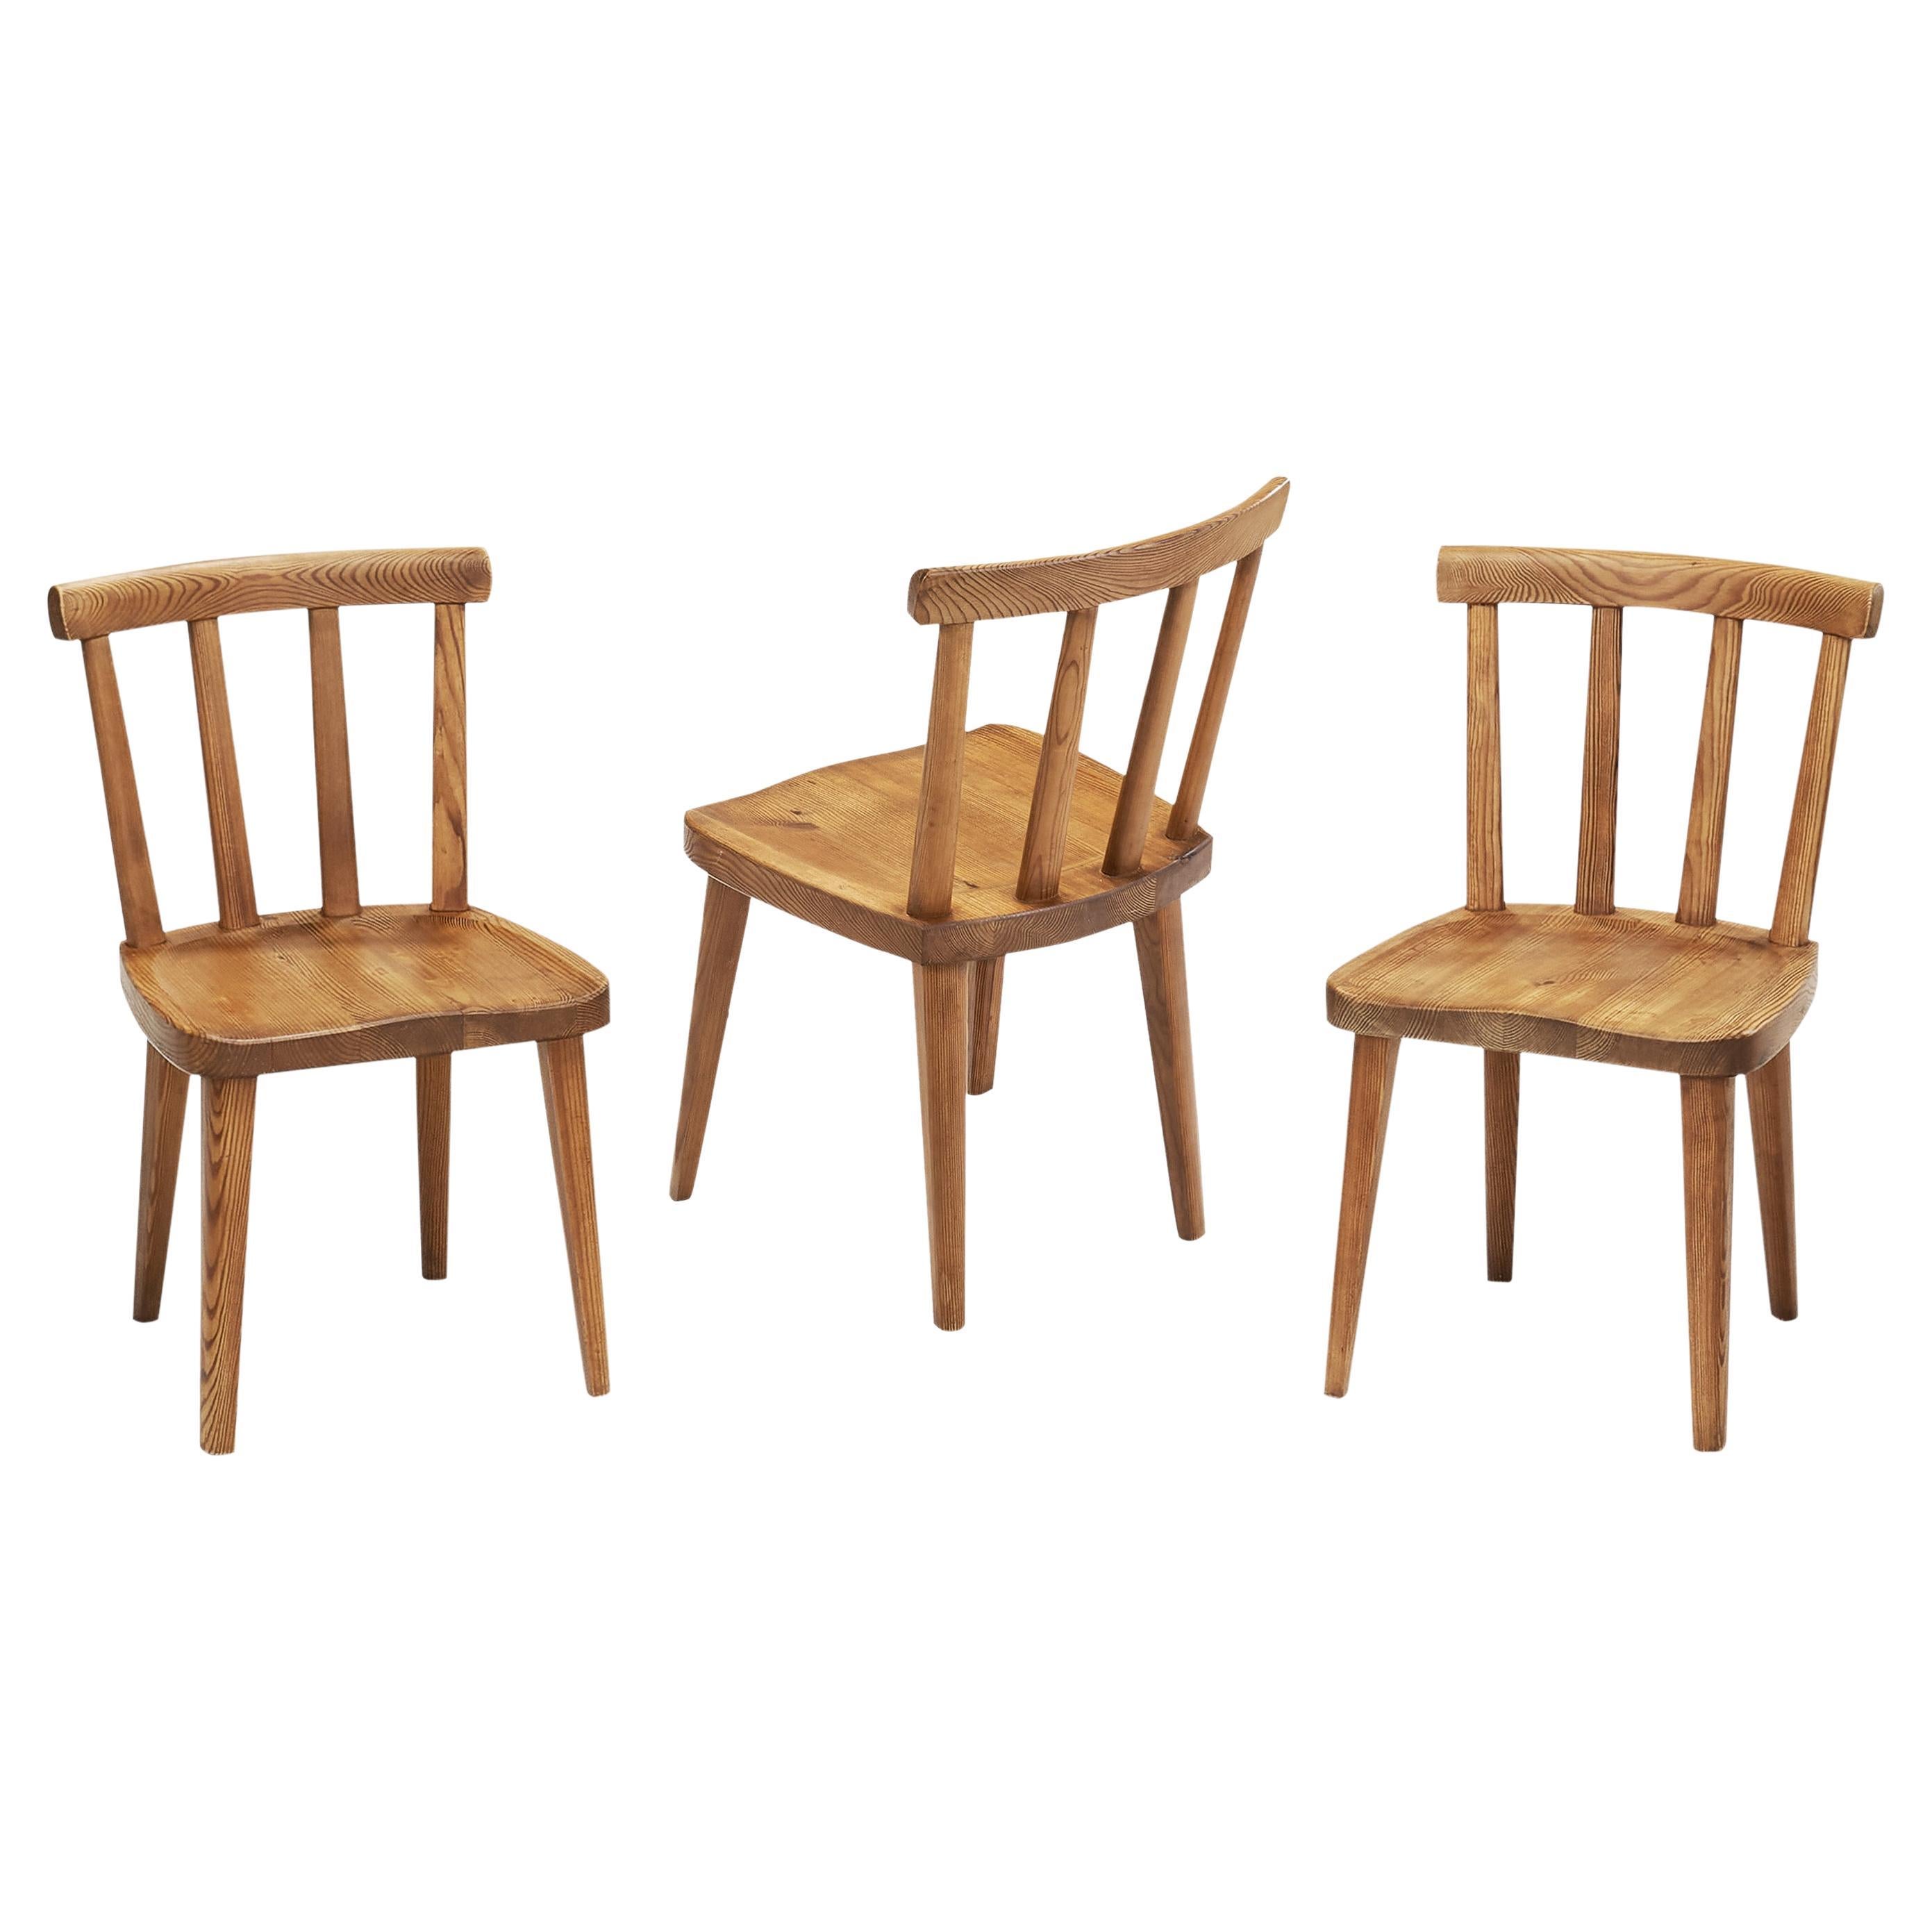 Set of 3 "Utö" Chairs by Axel Einar Hjorth for Nordiska Kompaniet, Sweden 1930s For Sale